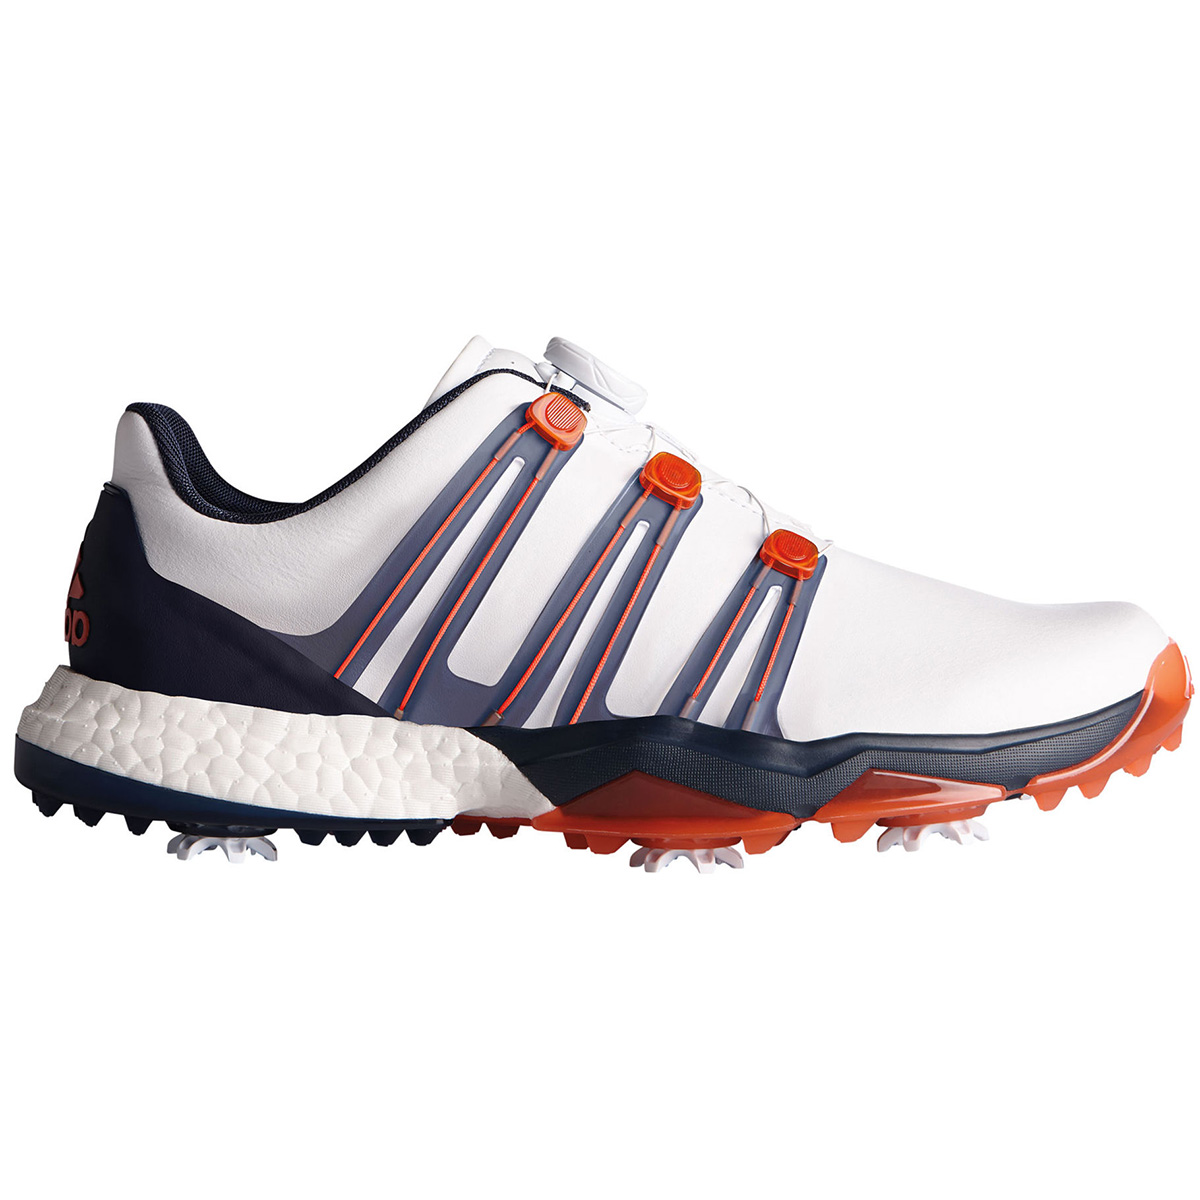 Golf Powerband BOA Boost Shoes | Golf